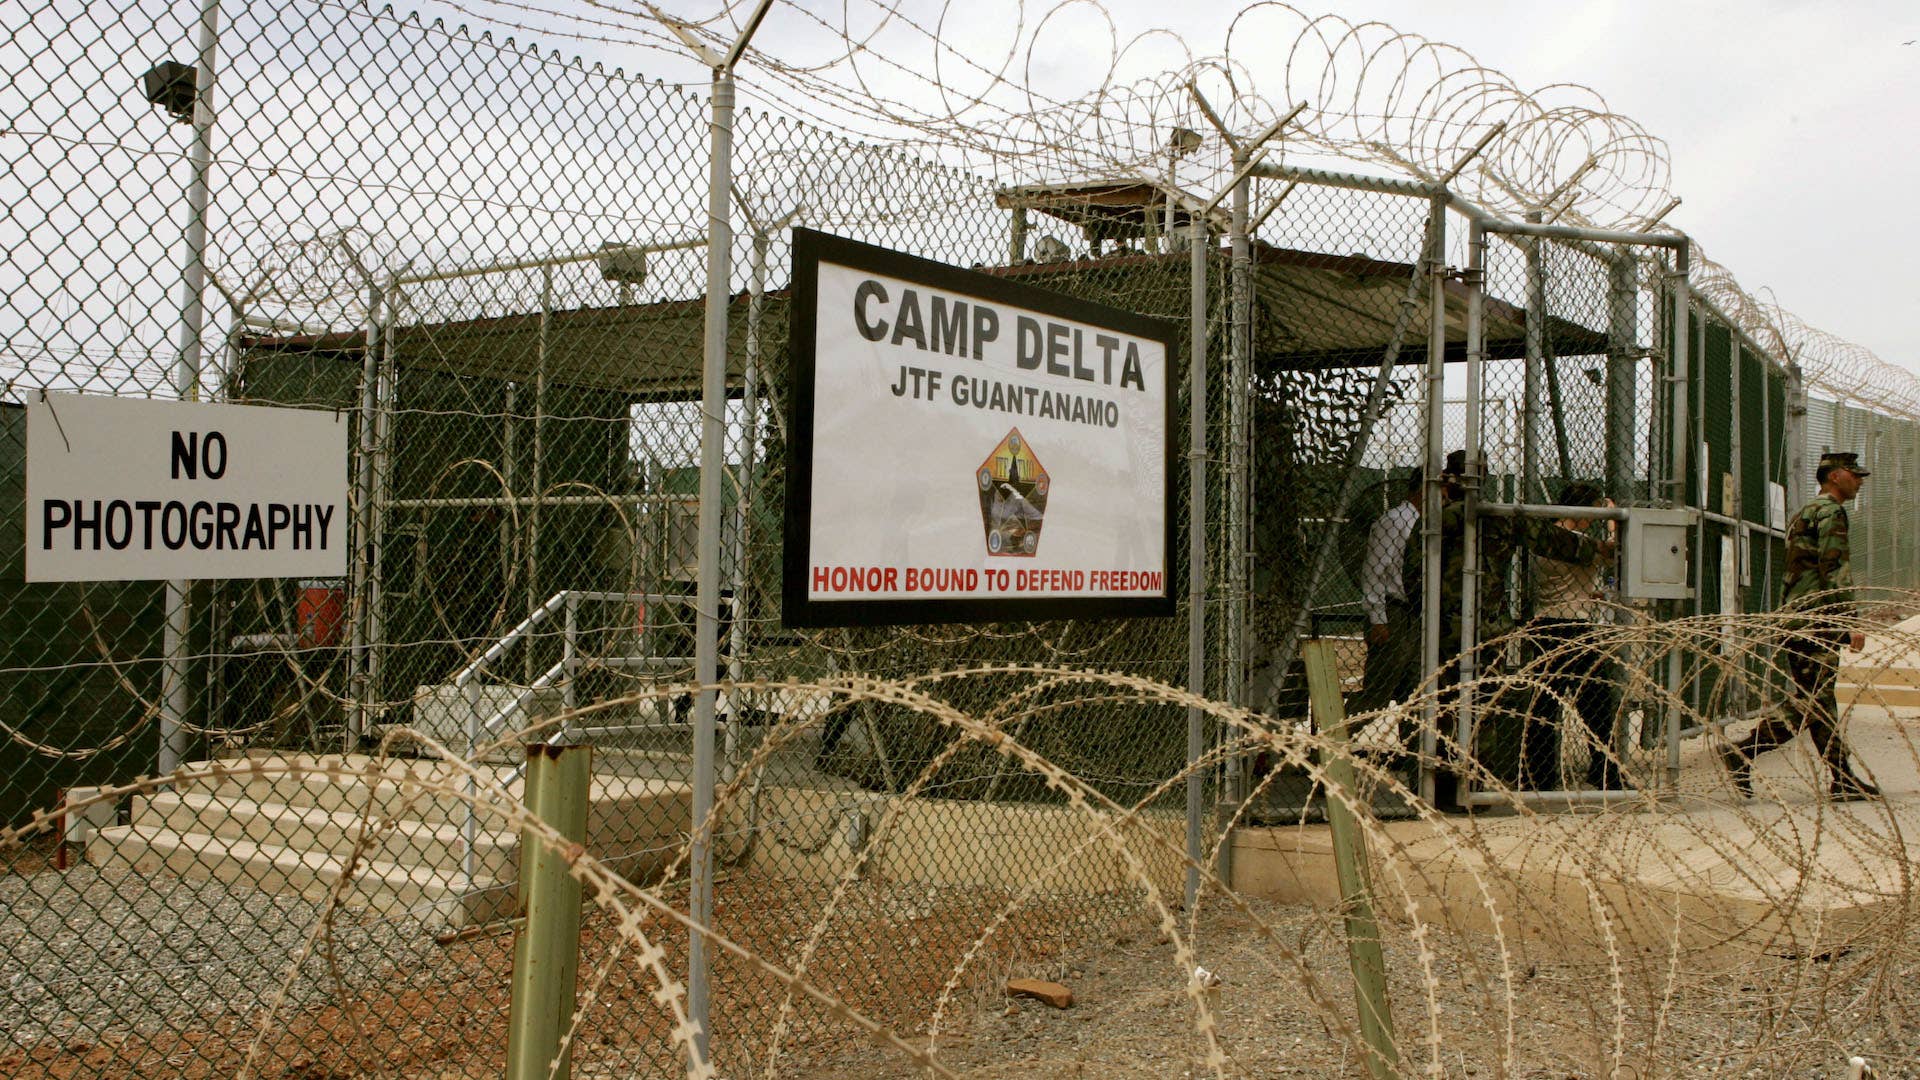 Photograph of Guantanamo Bay in Cuba